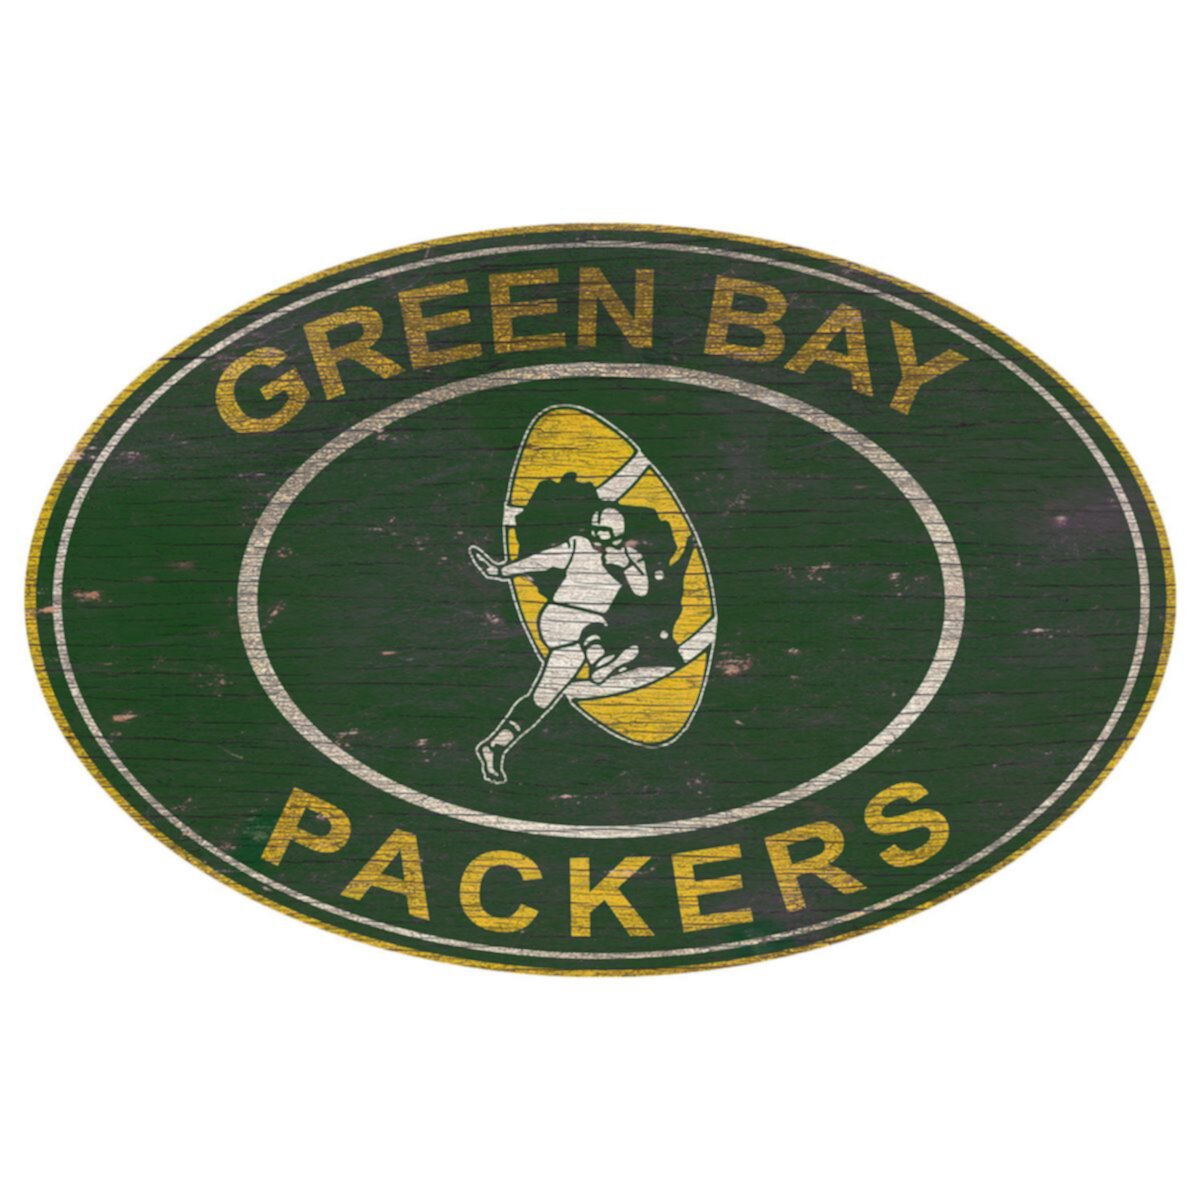 Овальный настенный знак Green Bay Packers Heritage Fan Creations